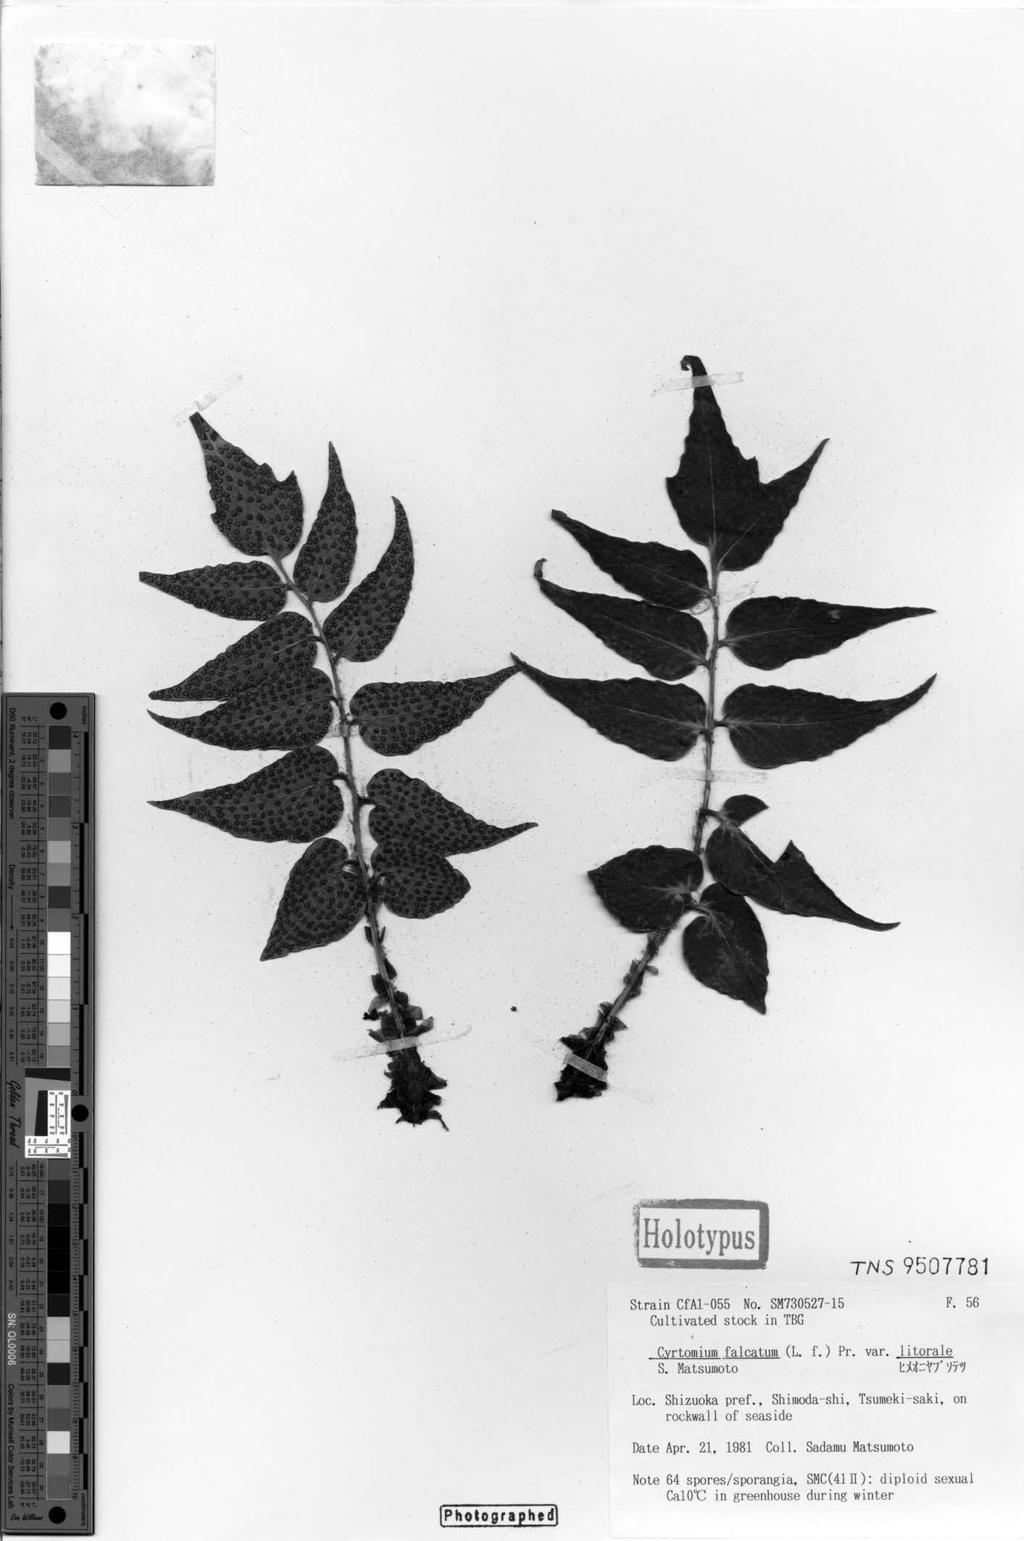 22 Atsushi Ebihara et al. Fig. 3. Holotype of Cyrtomium falcatum subsp. littorale. Gard. 22: 70, 2003. Jap. Name: Hime-oni-yabusotetsu Differs from Cyrtomium falcatum subsp.